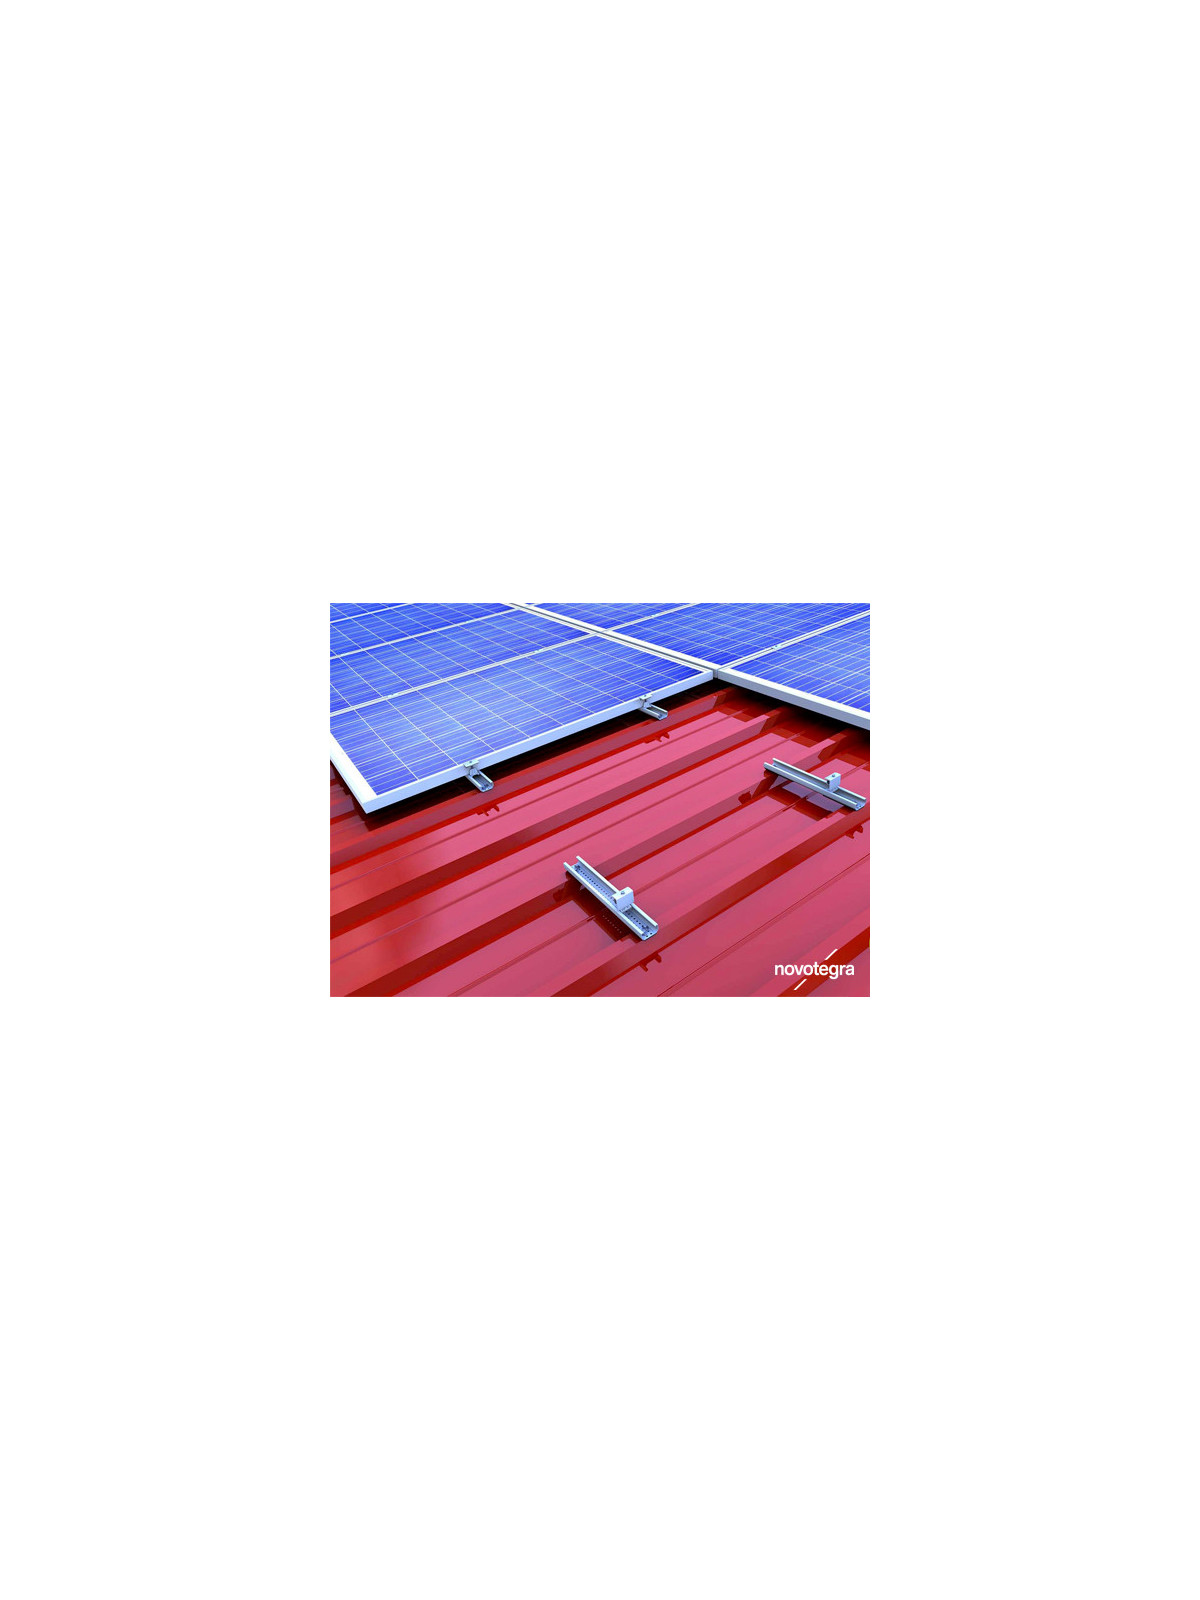 Steel roof mounting kit